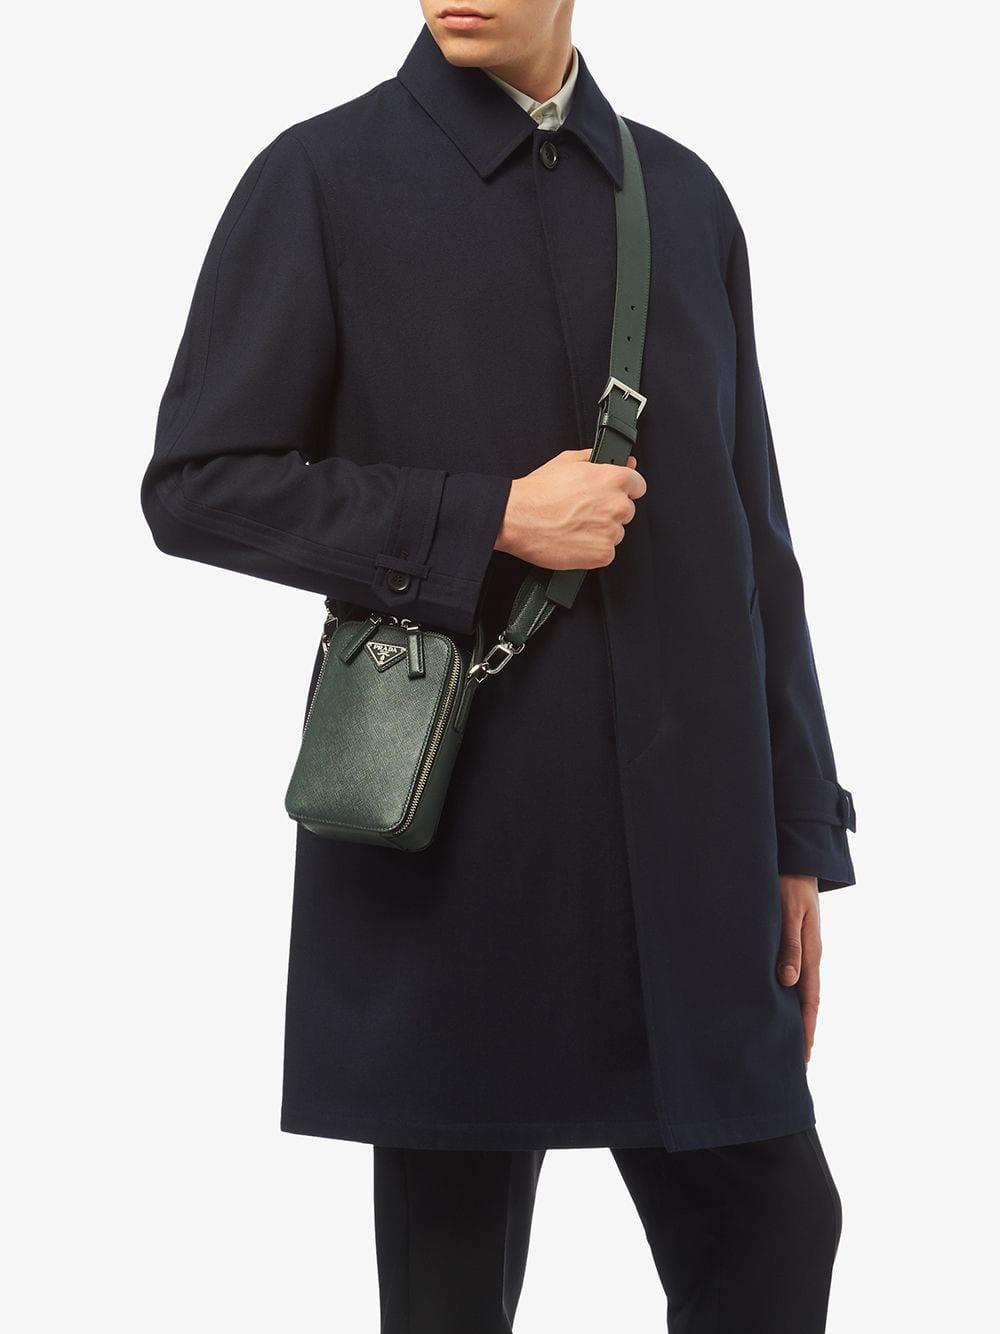 Prada Brique Saffiano Leather Bag in Natural for Men